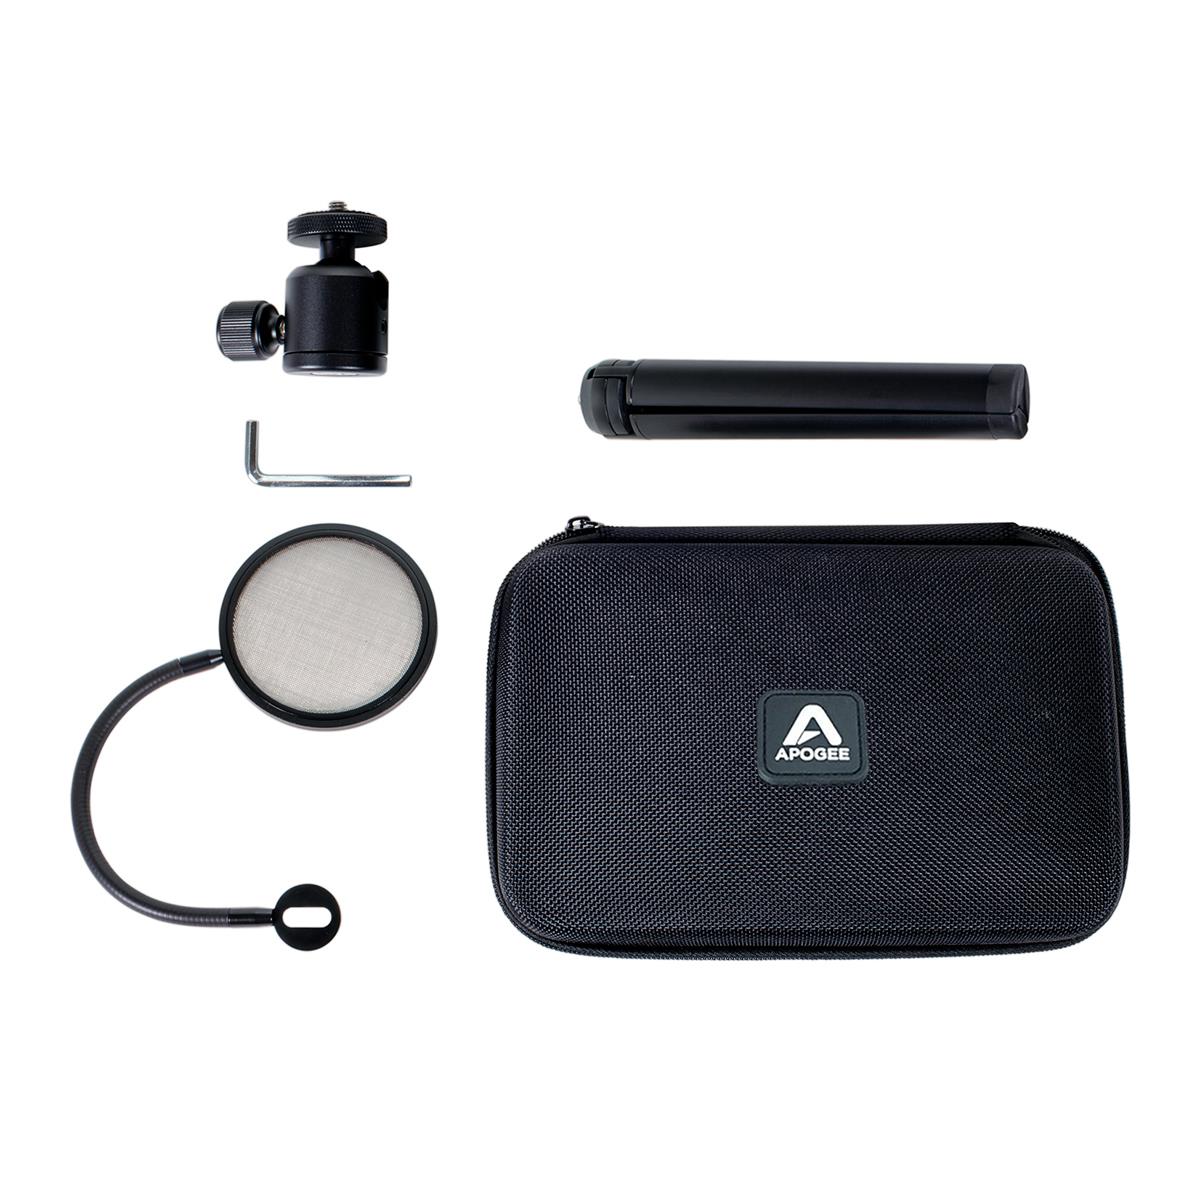 Image of Apogee Electronics Premium Mic Accessories Bundle with Tripod